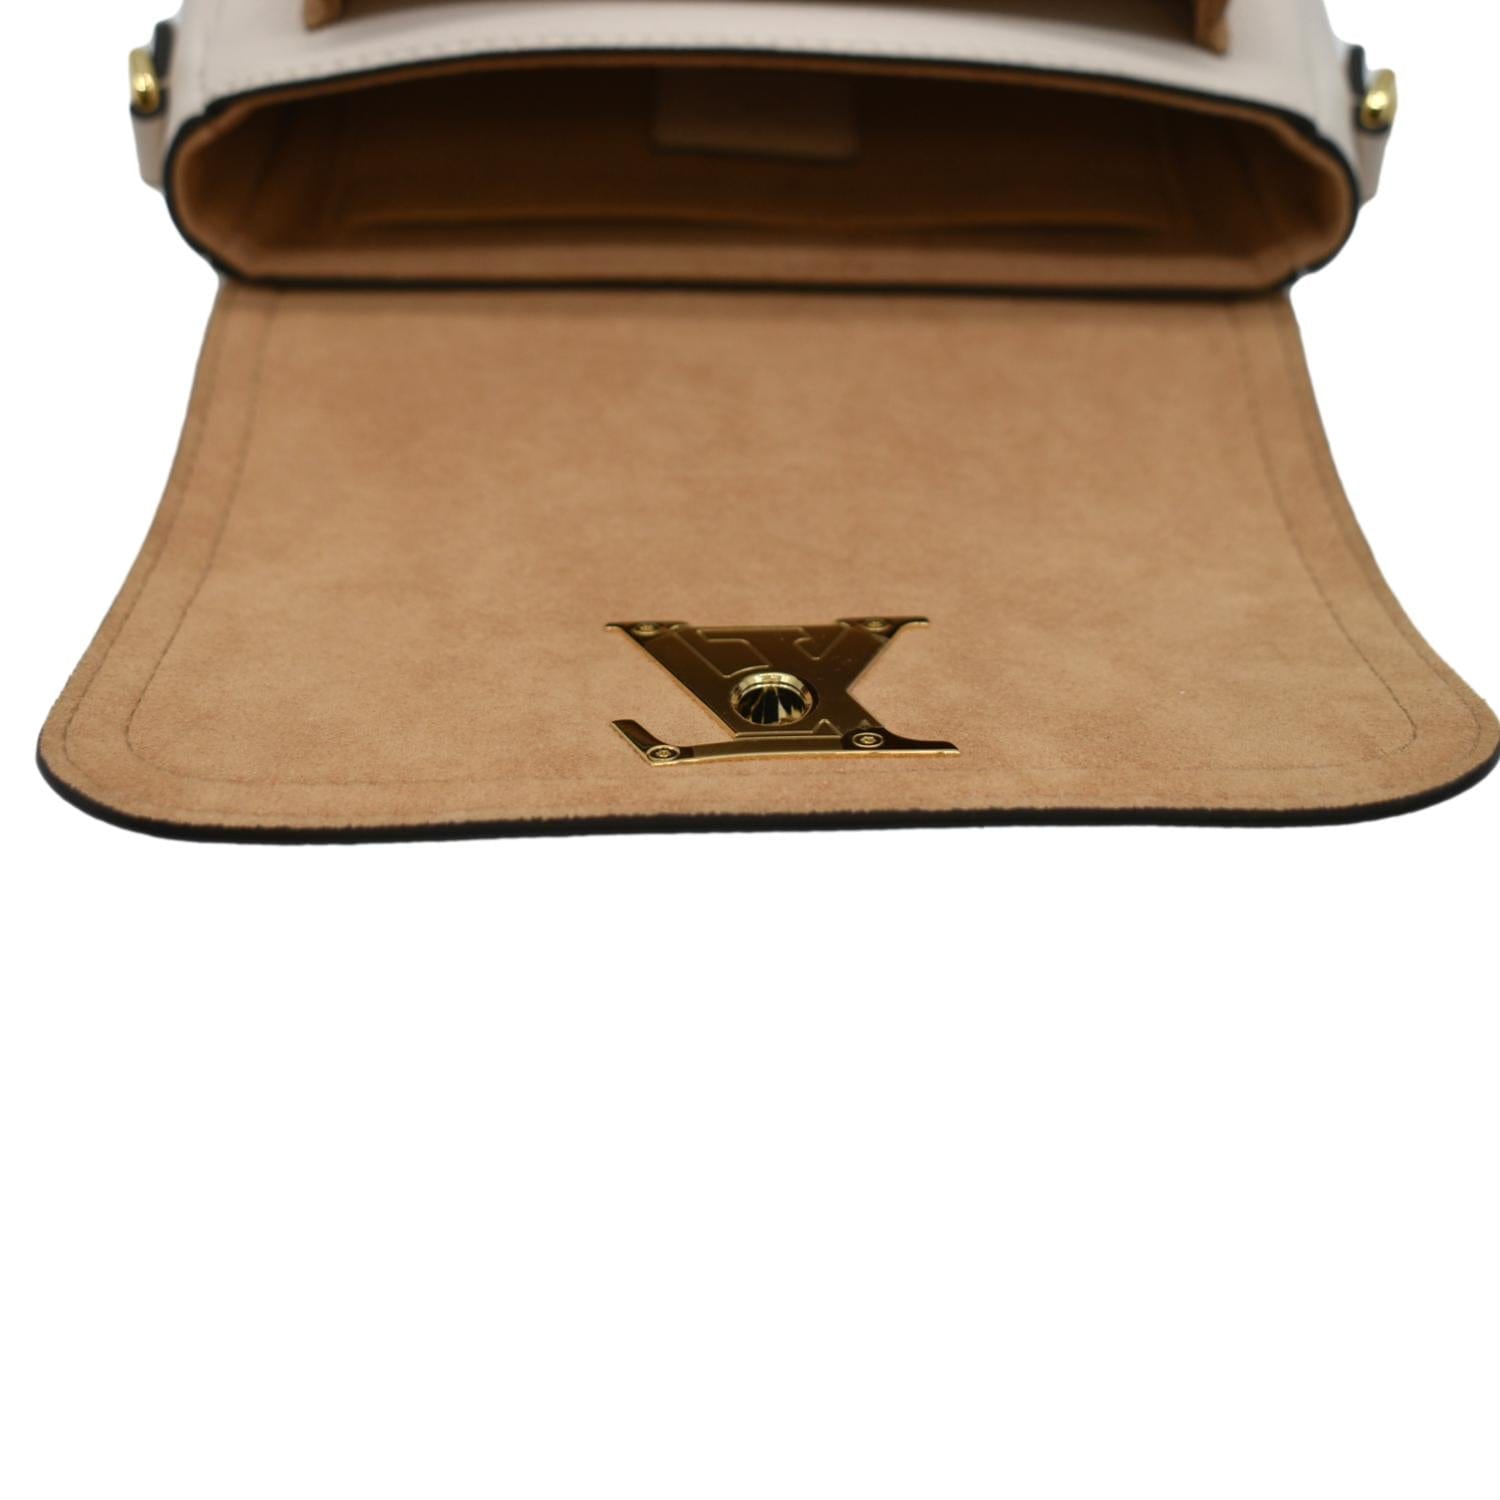 Louis Vuitton Lockme Tender Bag - For Sale on 1stDibs